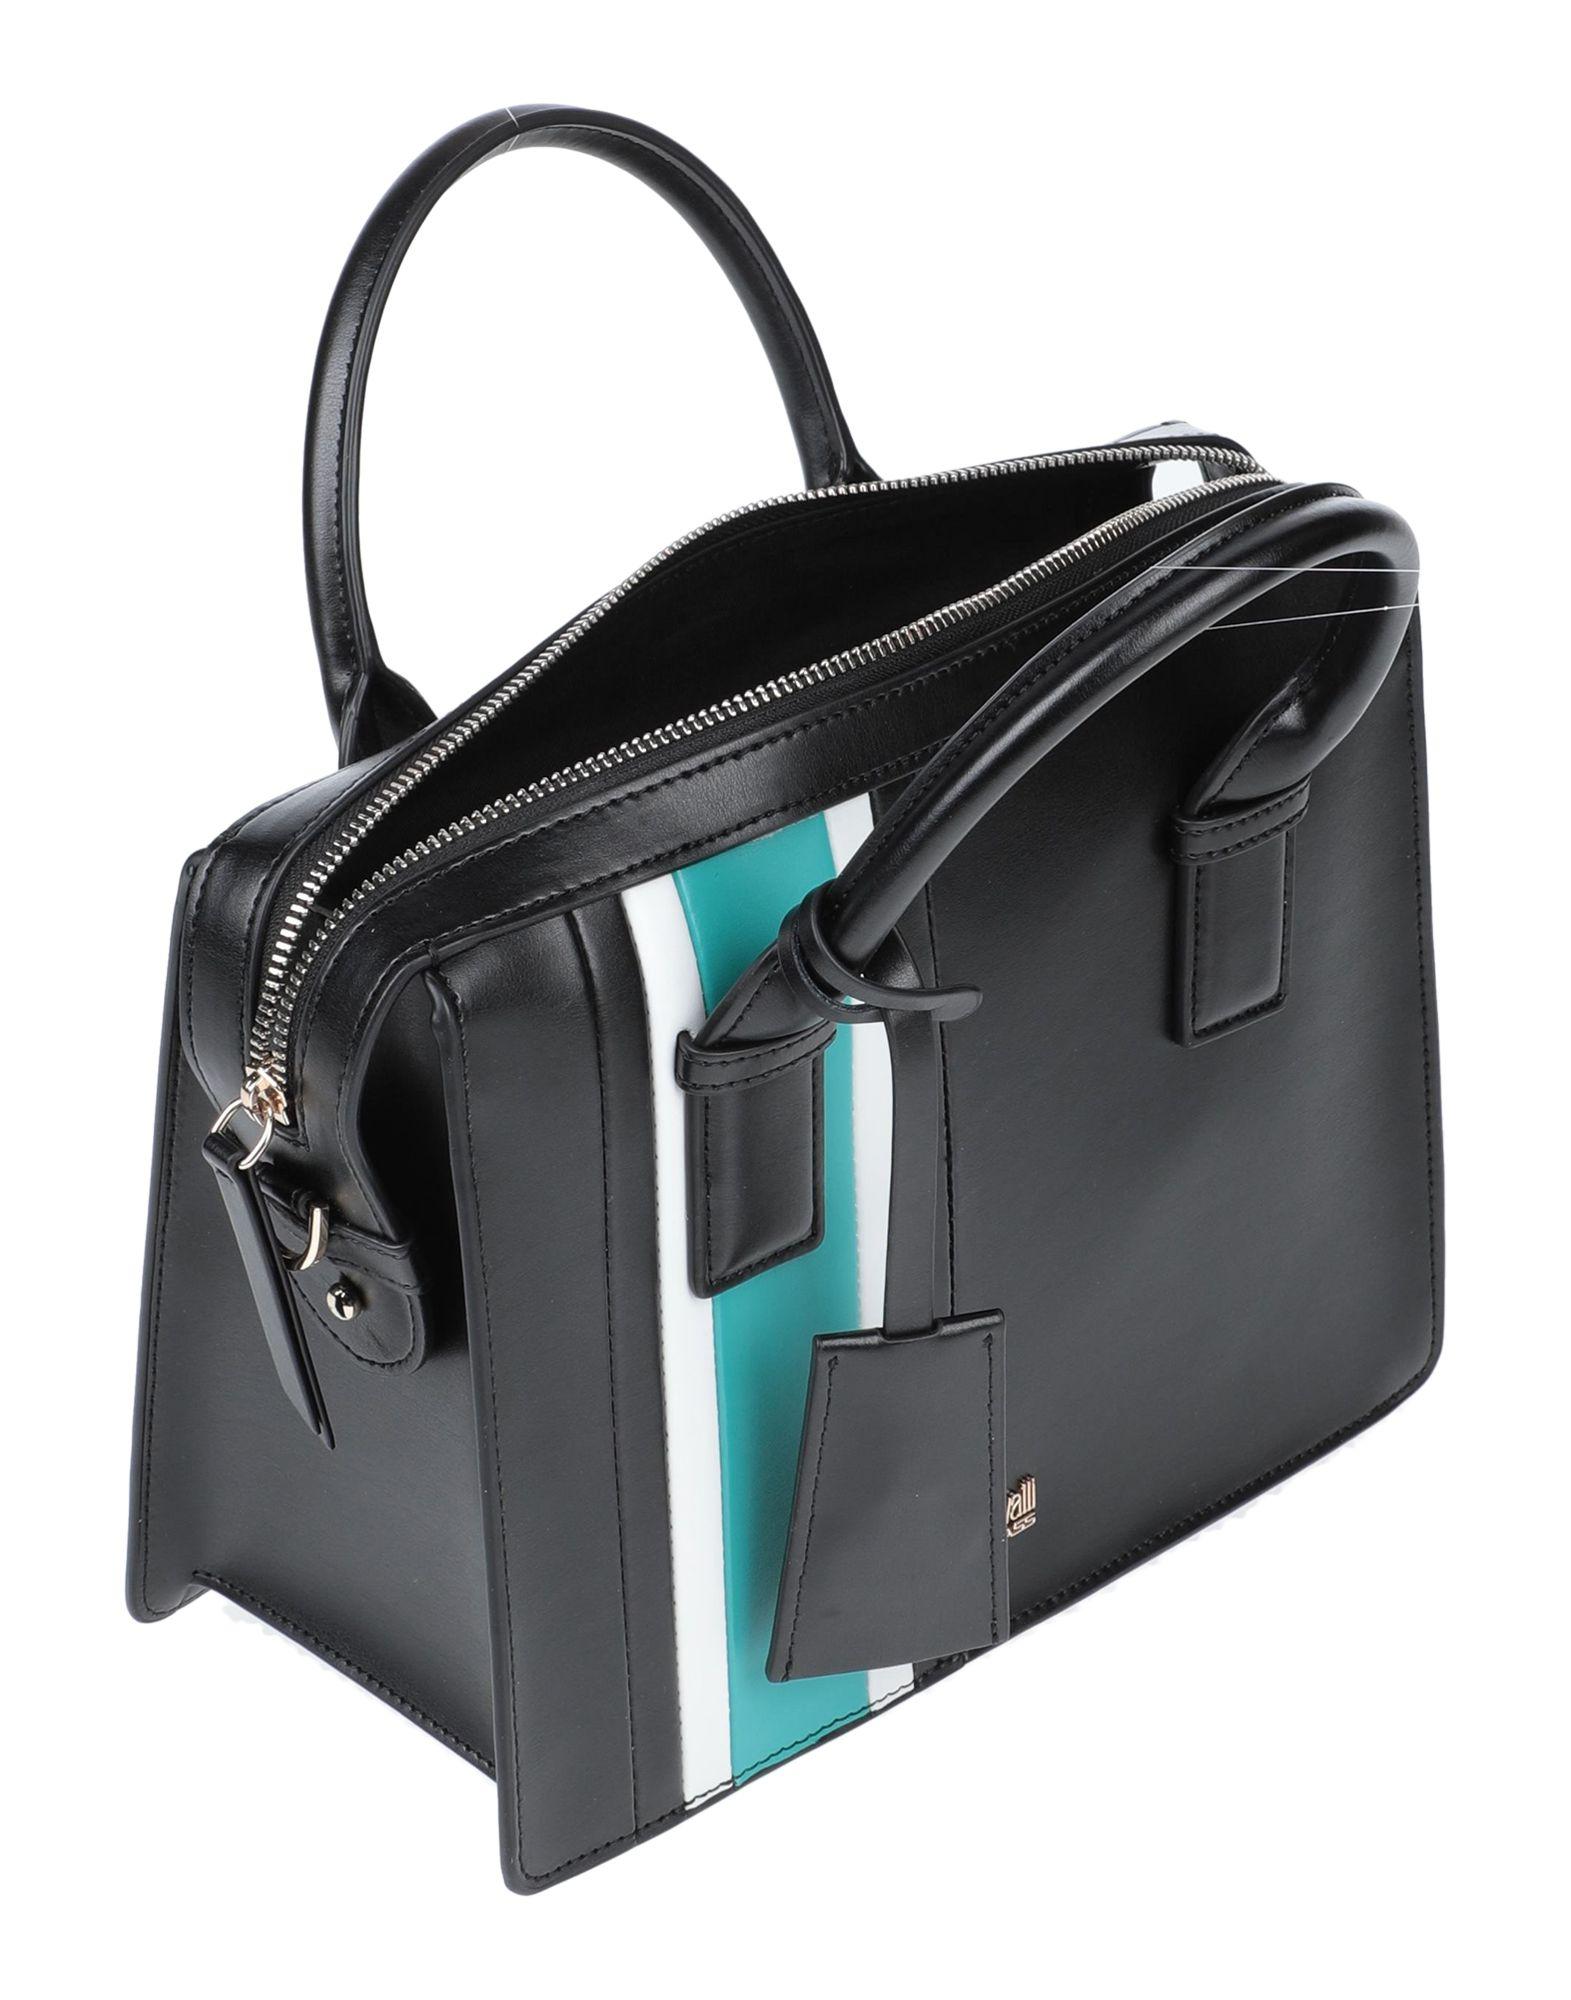 Class Roberto Cavalli Leather Handbag in Black - Lyst